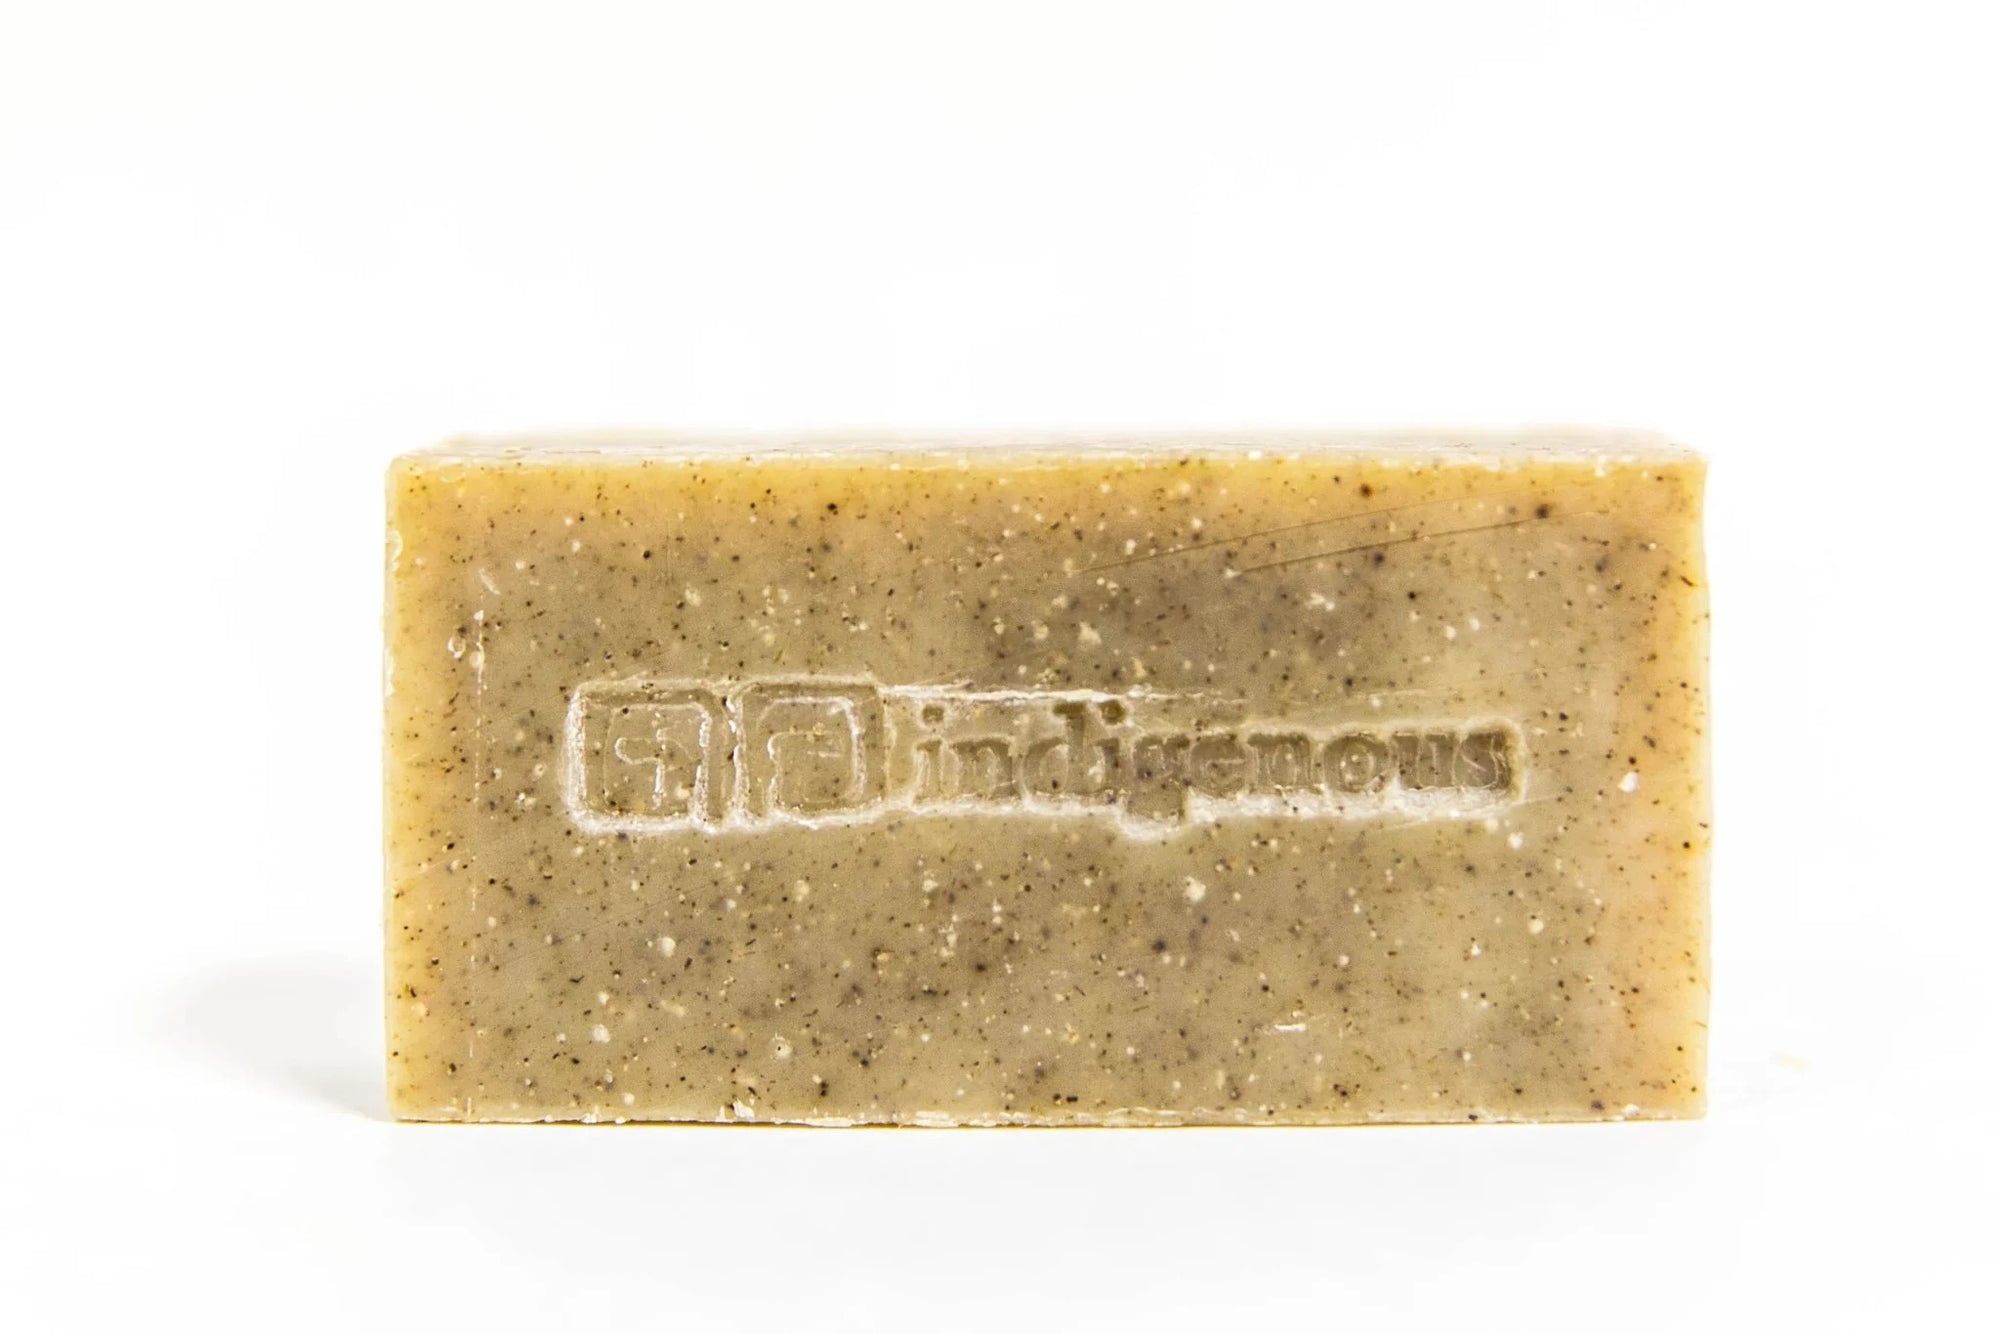 Pop-Up Mākeke - The Indigenous Soap Company - Sage Soap Bar - Unpackaged